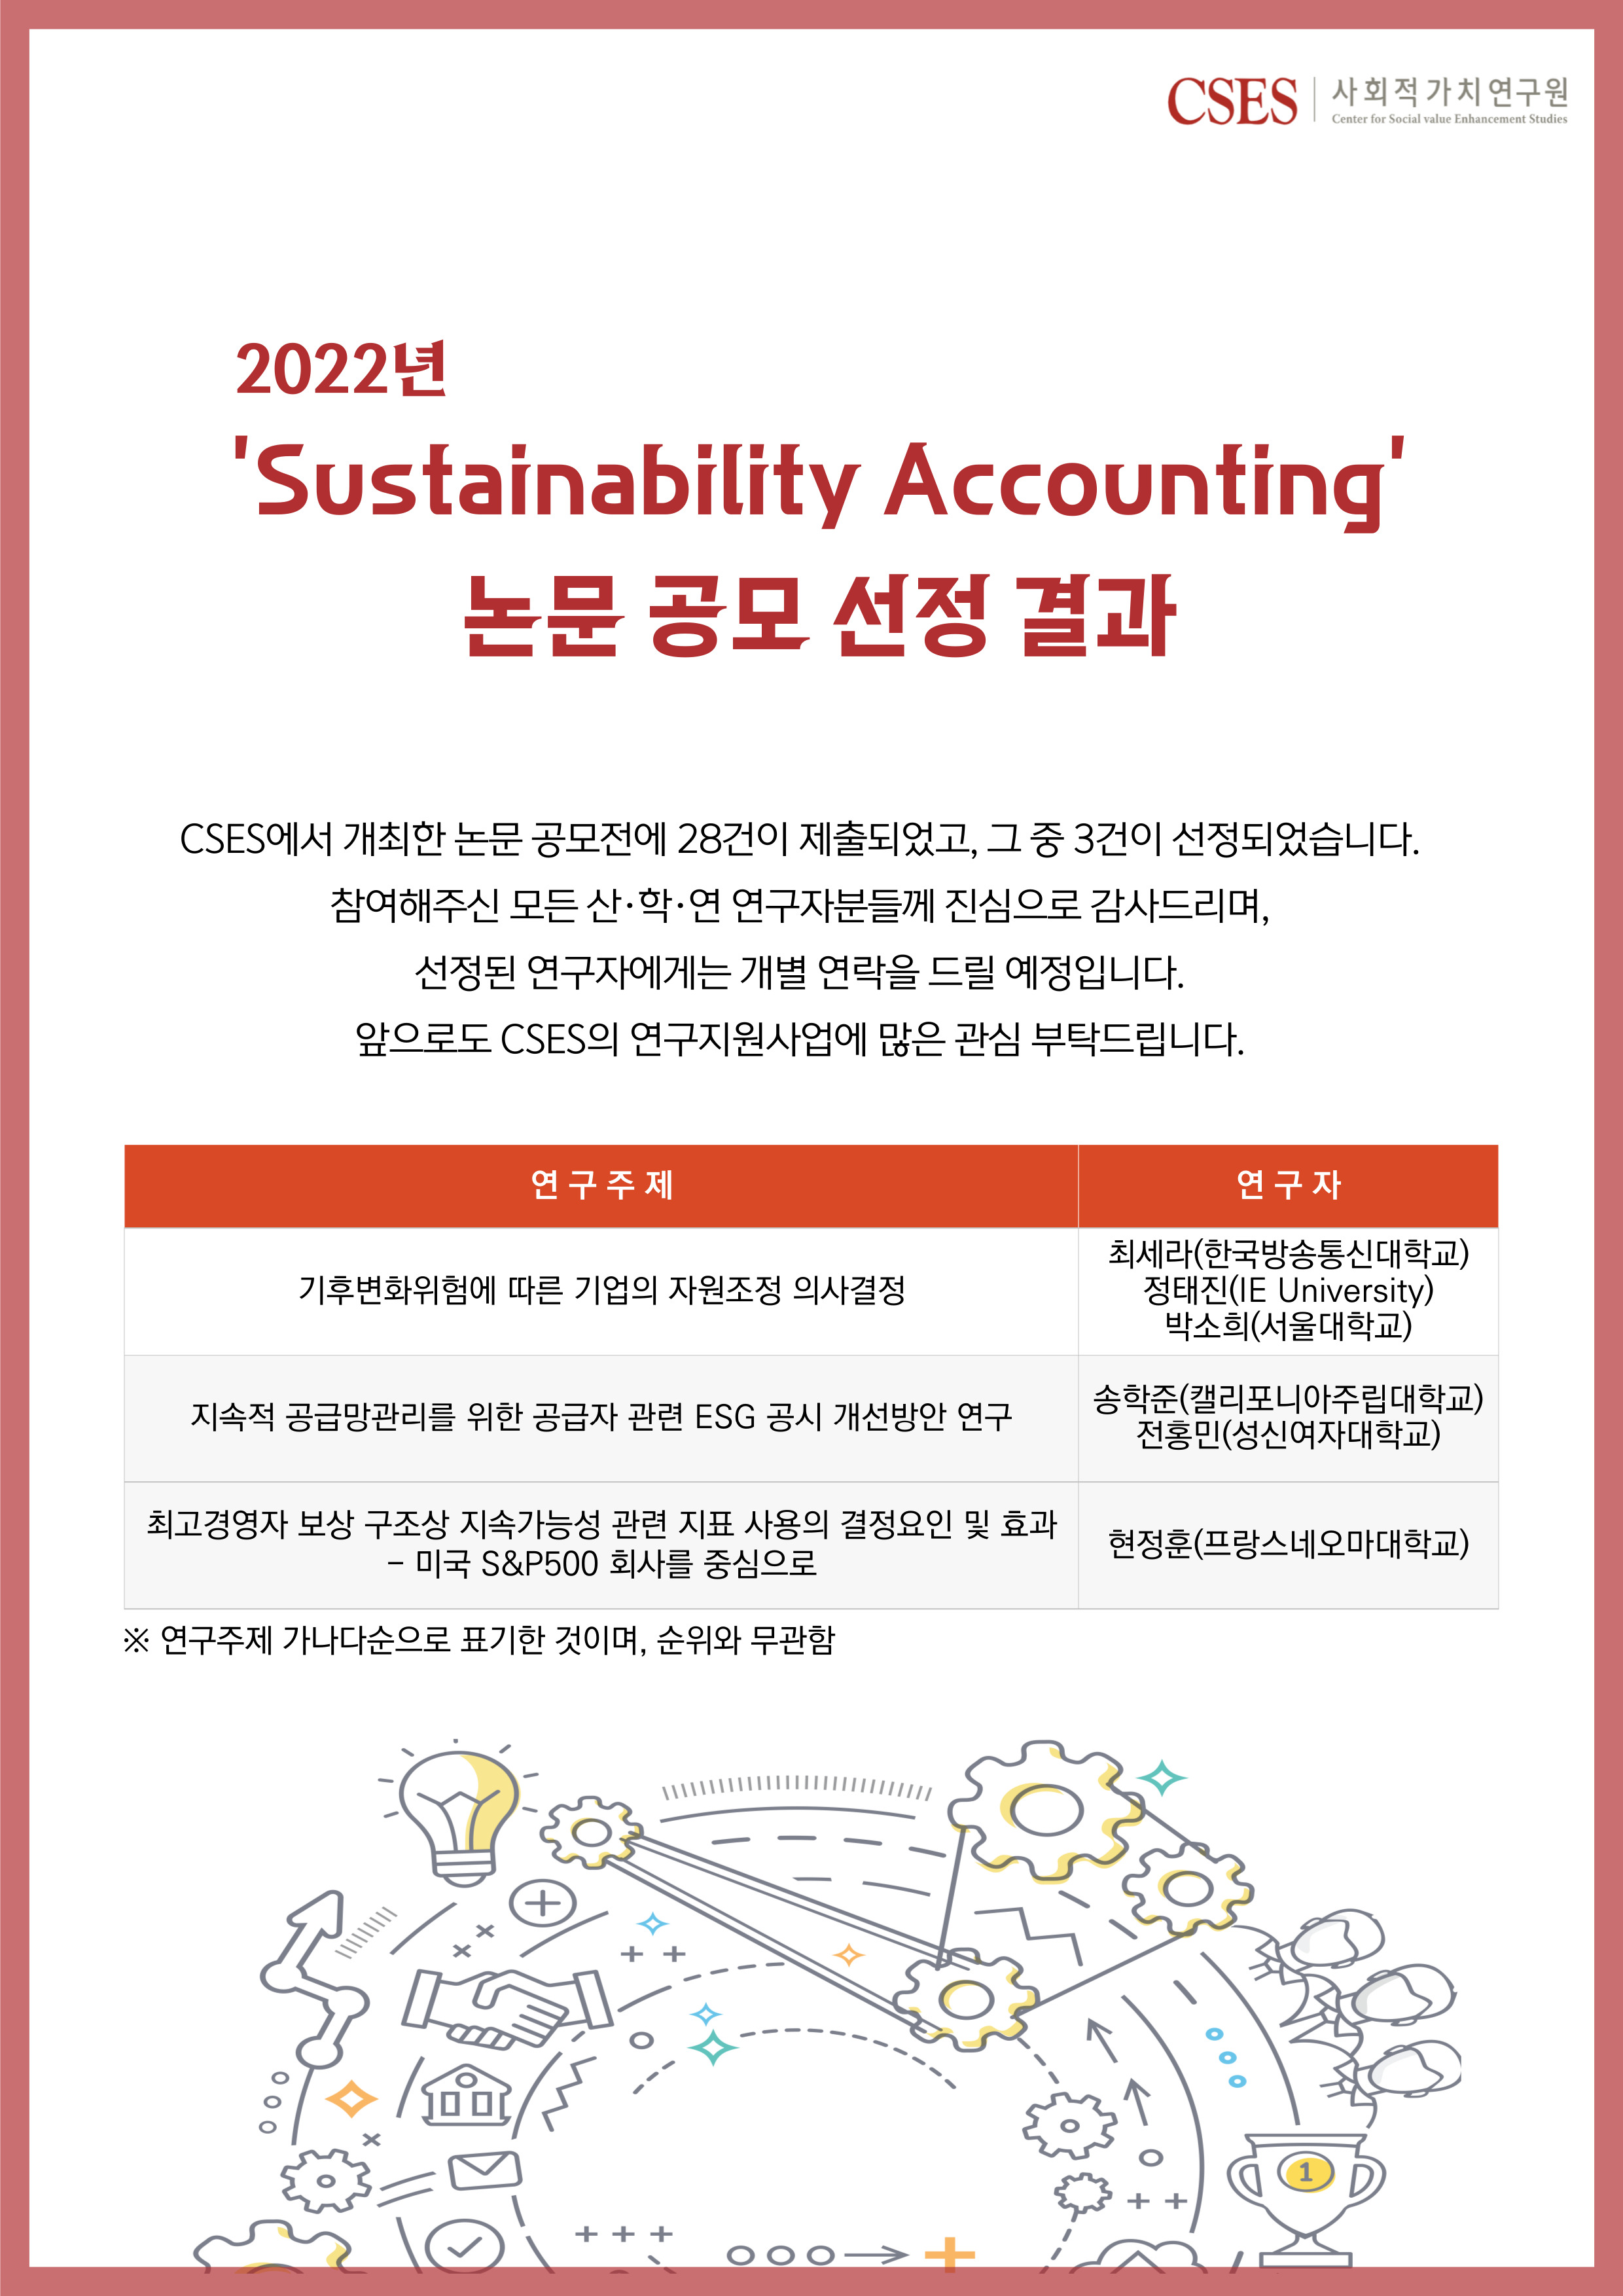 Sustainability Accounting 논문 공모 선정 결과(연구주제, 연구자)에 대한 이미지 입니다. 자세한 사항은 하단 내용을 참고해주세요